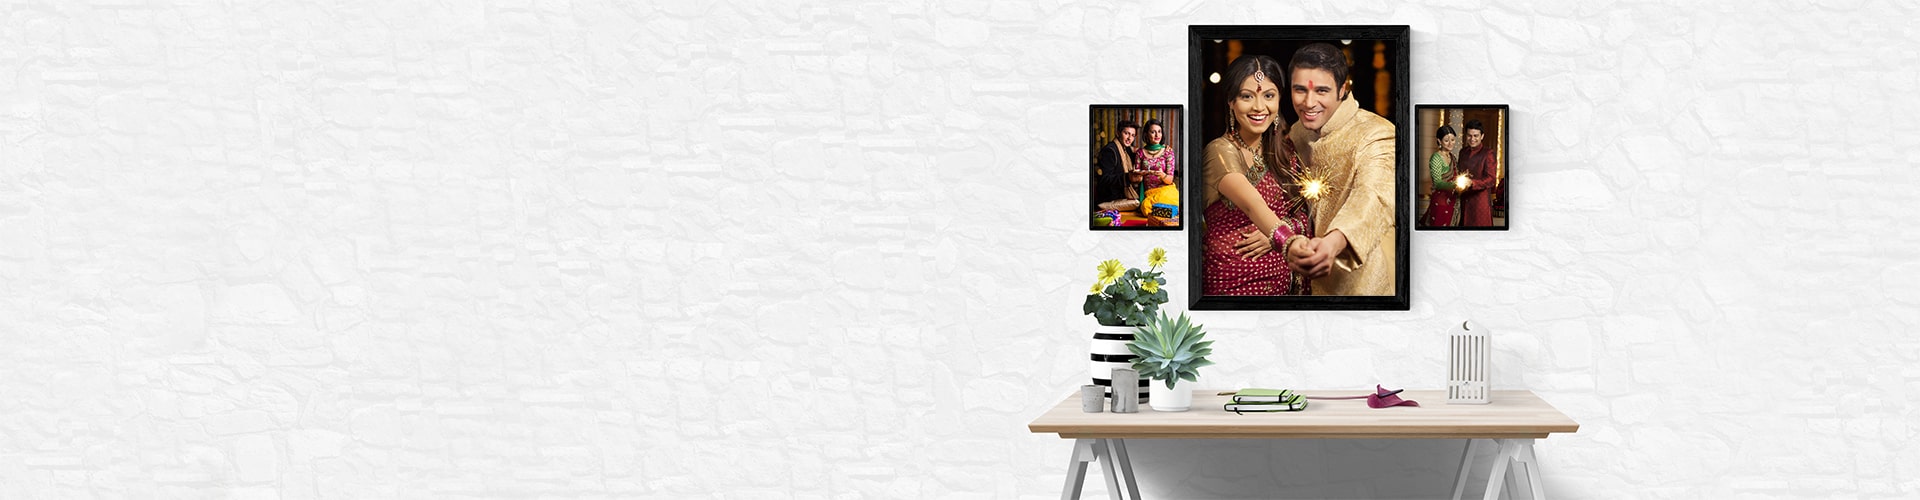 Framed Prints - Create Custom Photo Frams Online India - Frame Prints